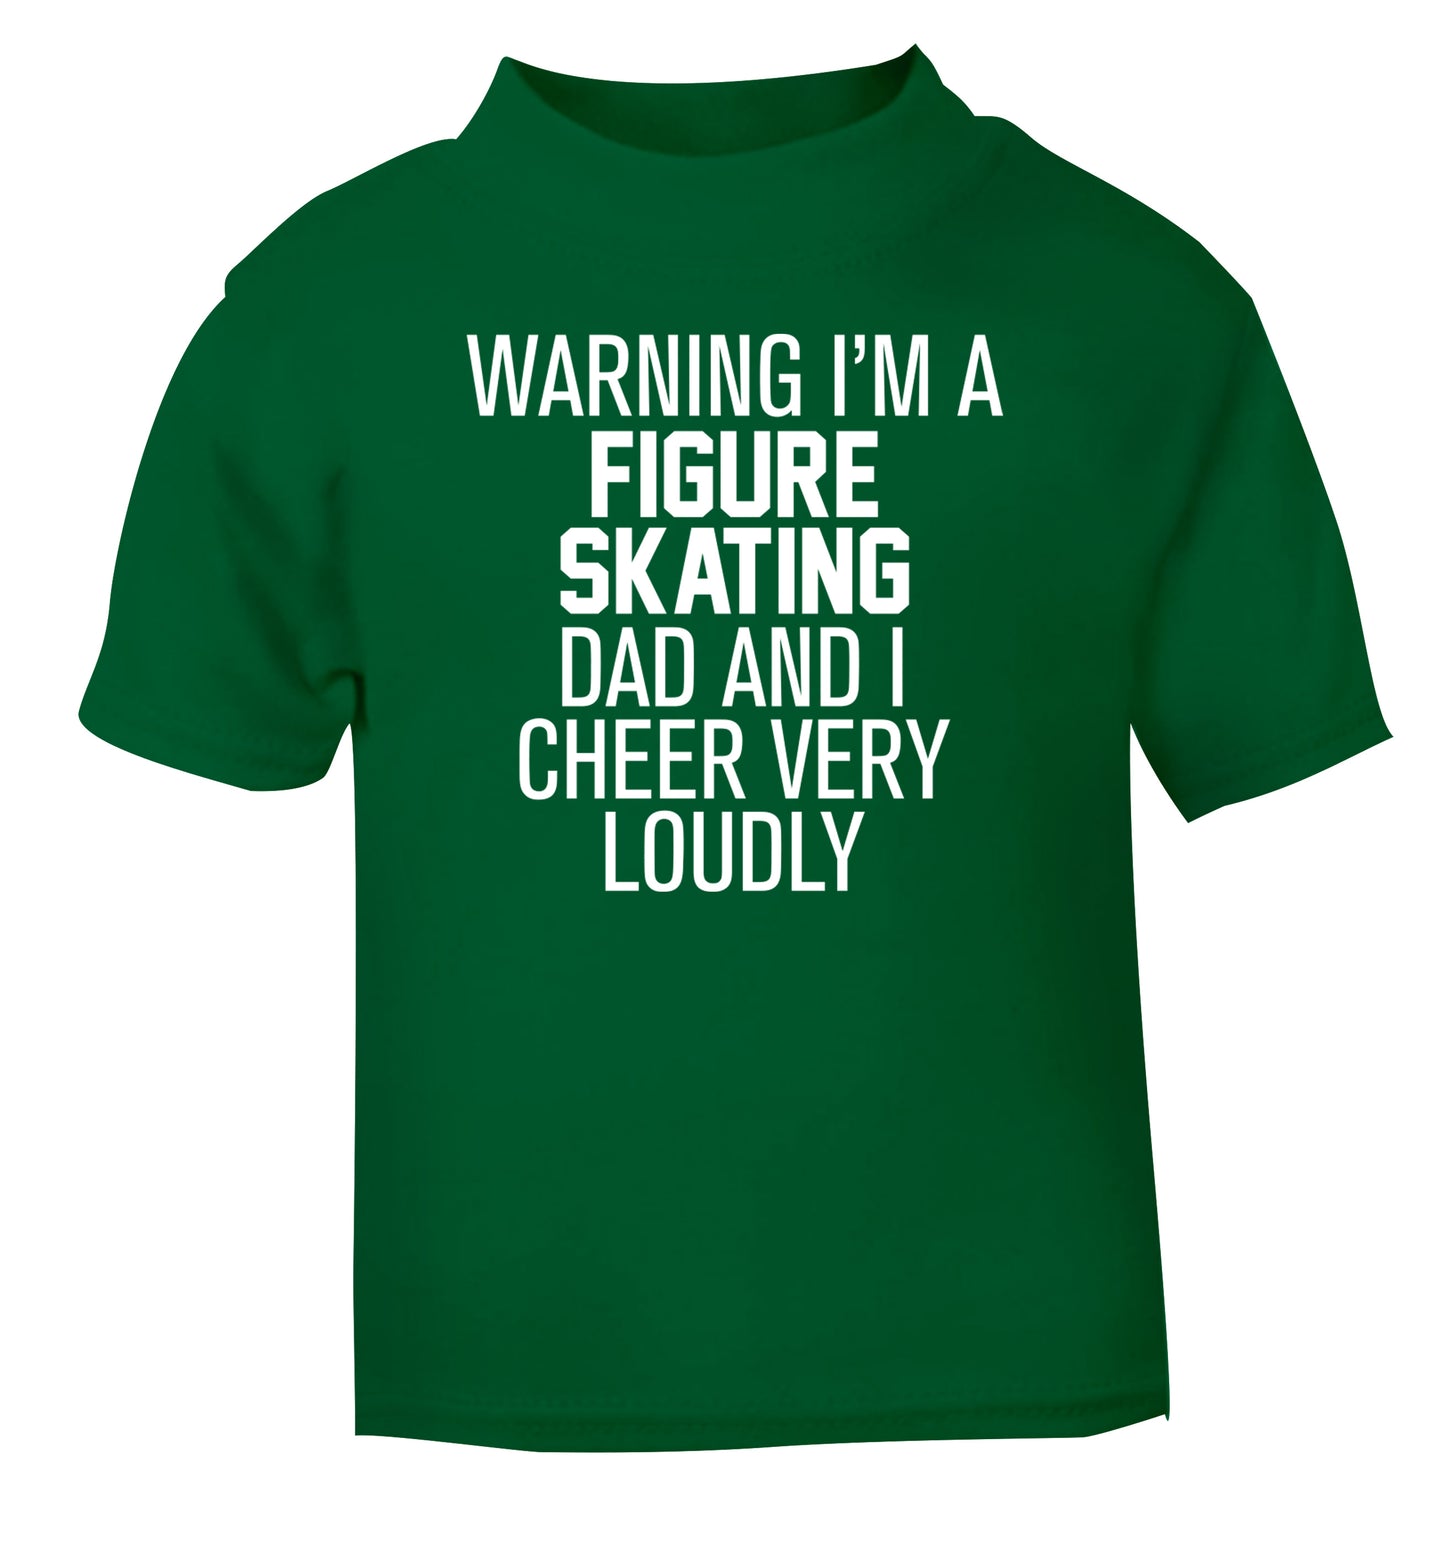 Warning I'm a figure skating dad and I cheer very loudly green Baby Toddler Tshirt 2 Years